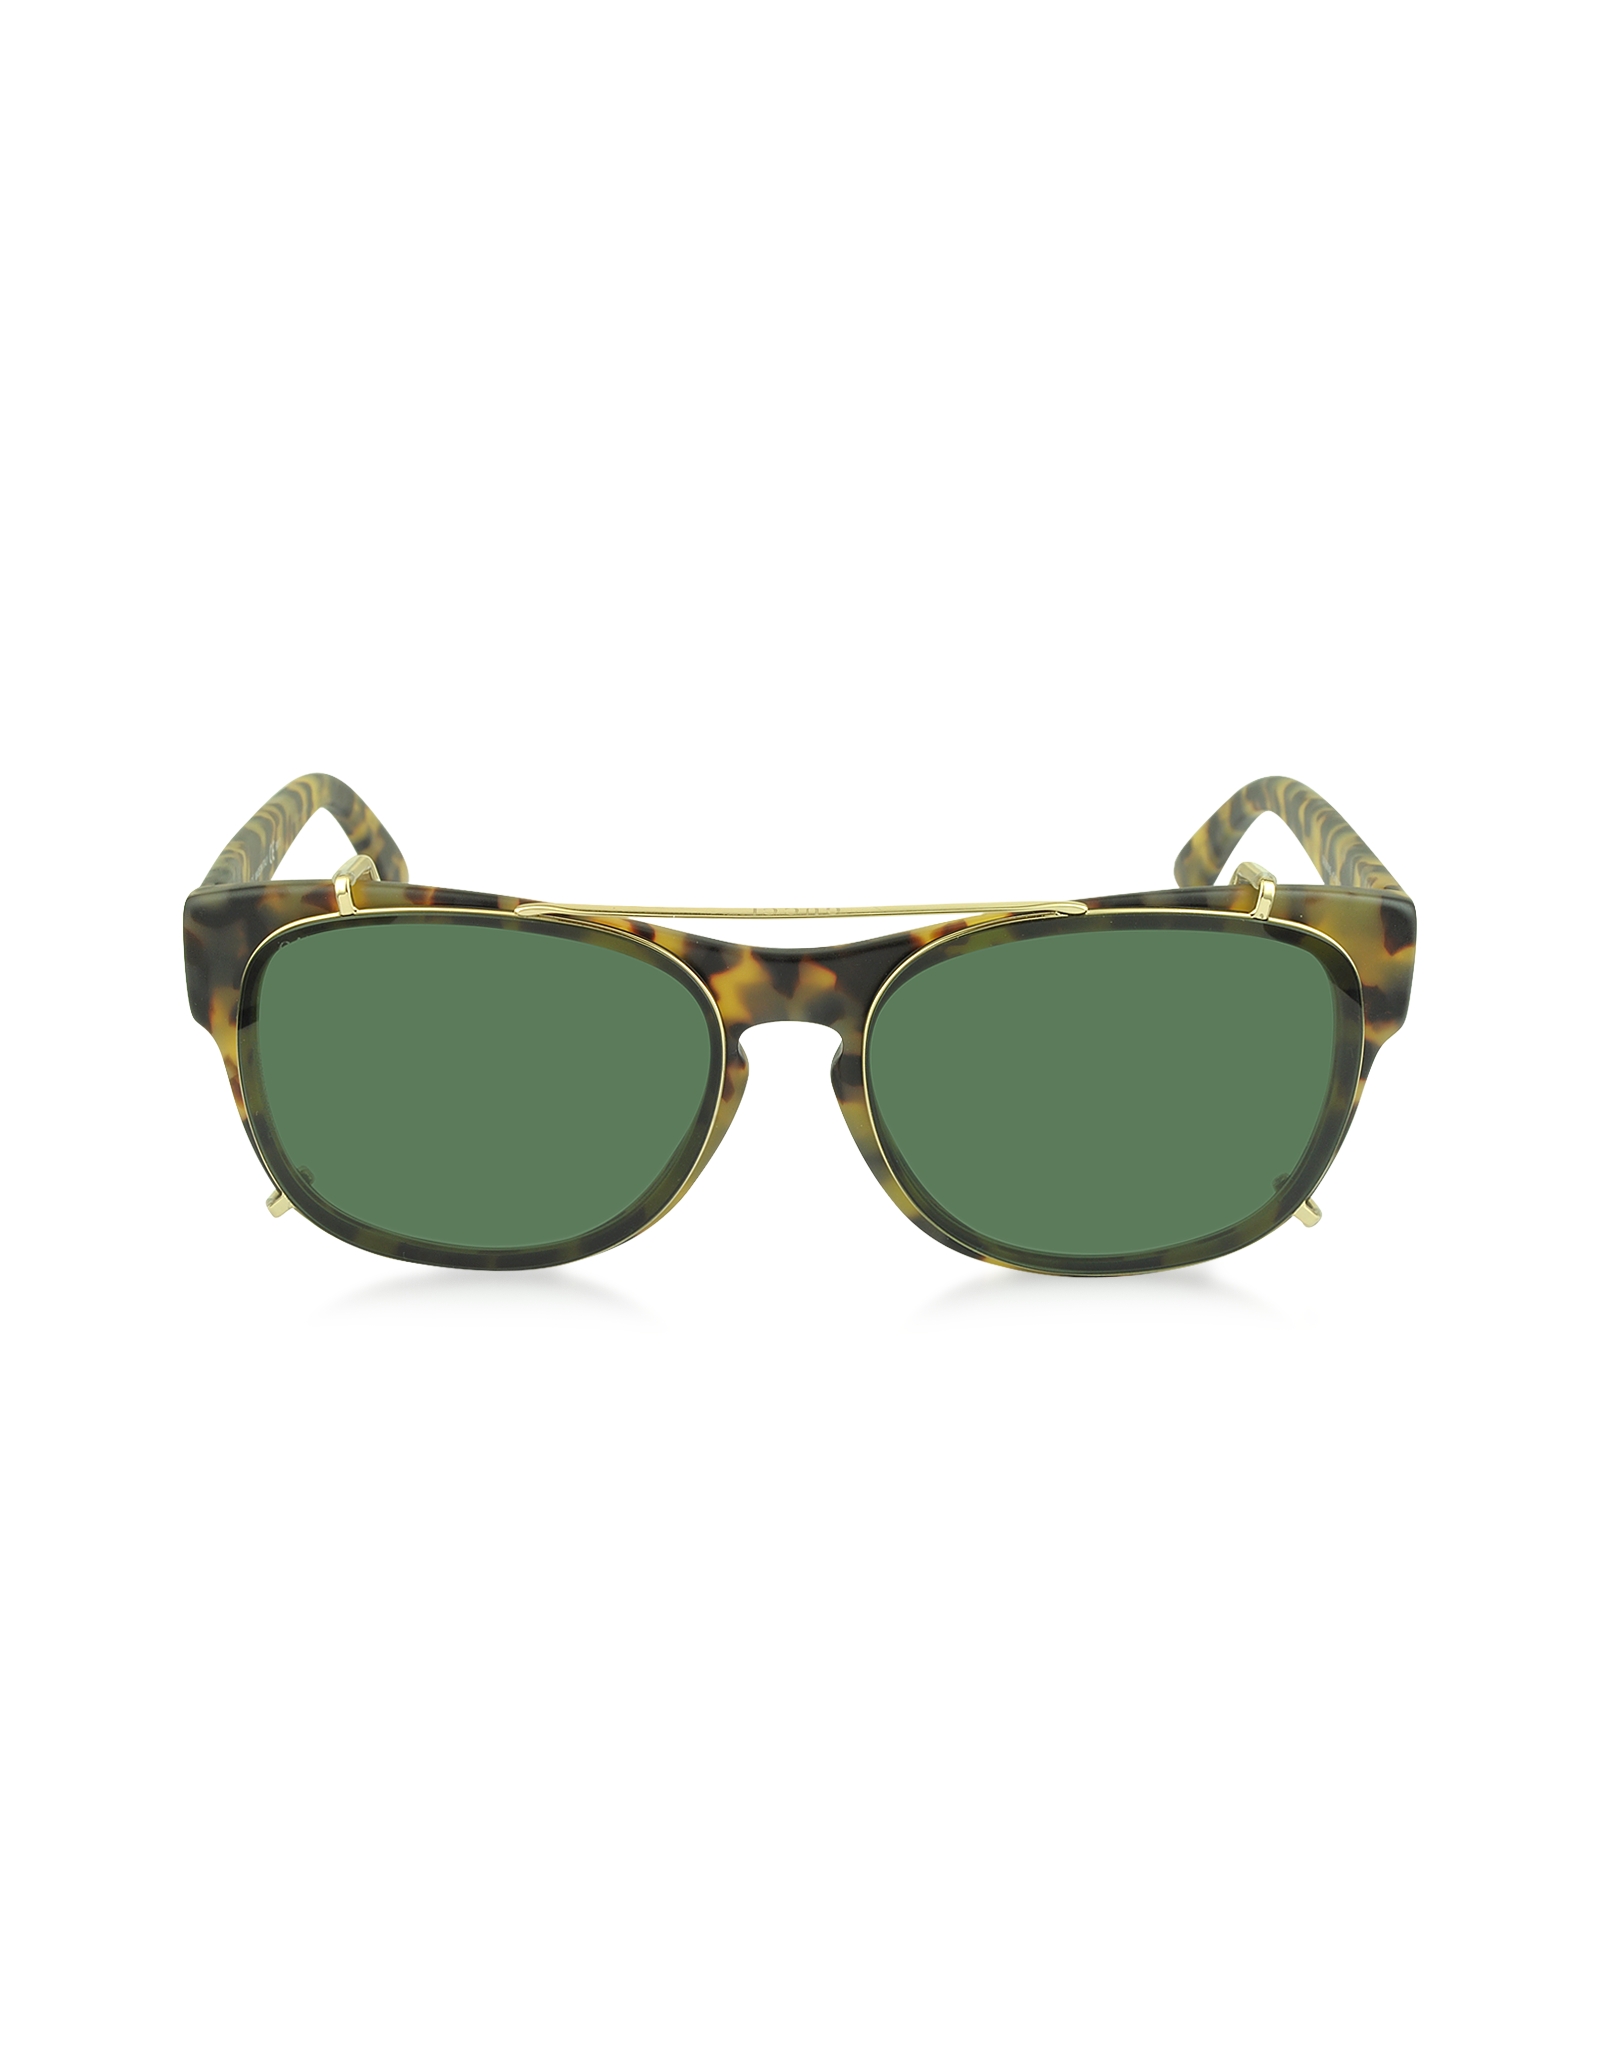 Lyst - Gucci Gg 3630/S 4Gx99 Light Havana Acetate Sunglasses in Brown ...